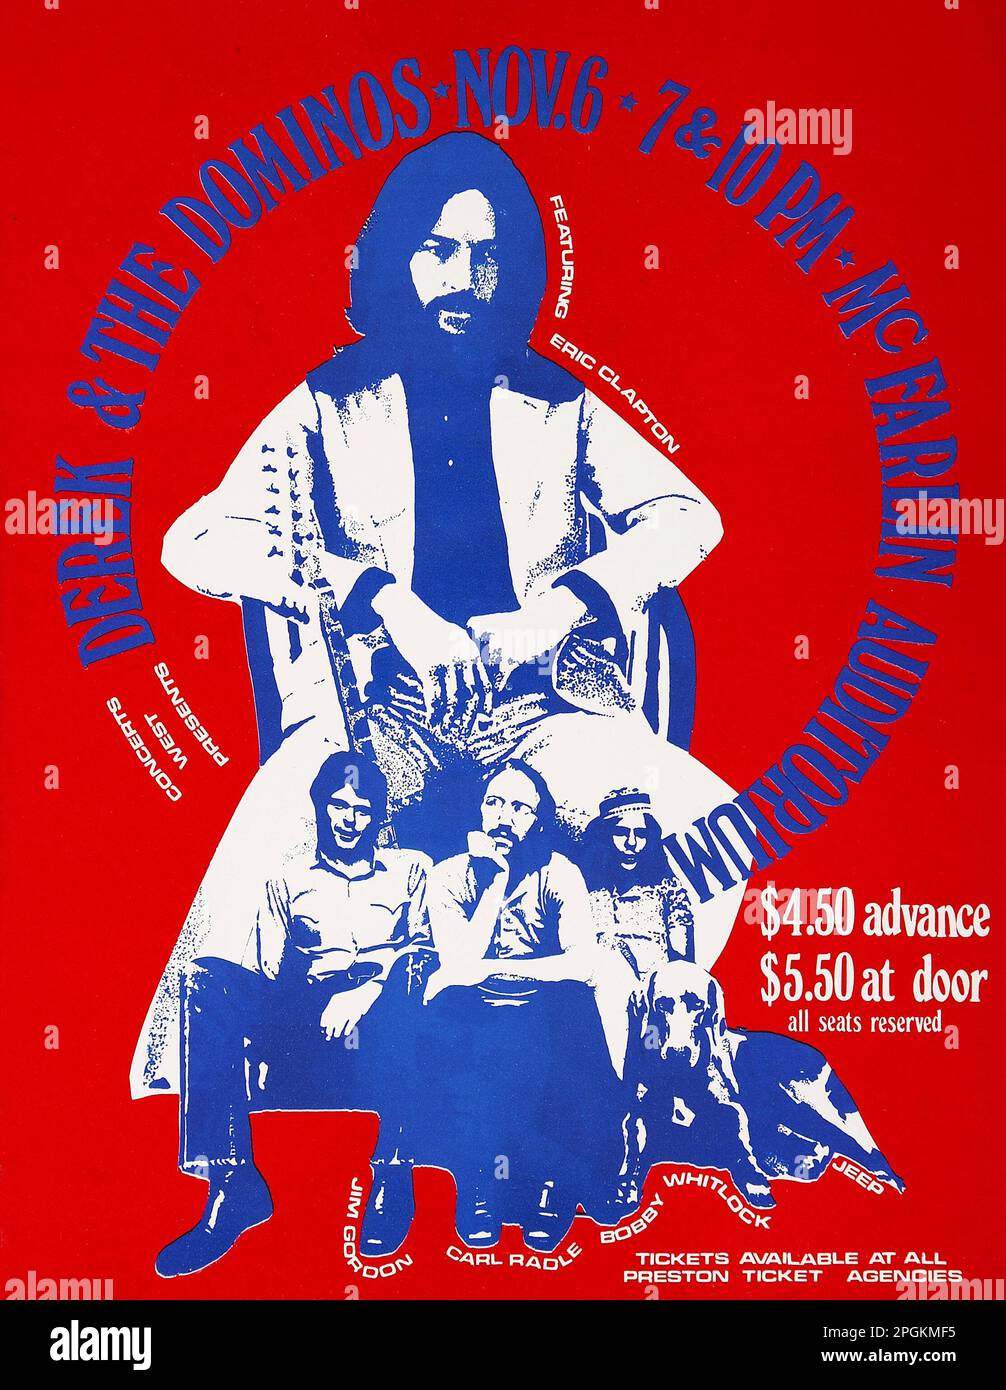 Concert West presents - Derek & The Dominos featuring Eric Clapton - McFarlin Auditorium Handbill - flyer - Concerts West, 1970. Stock Photo